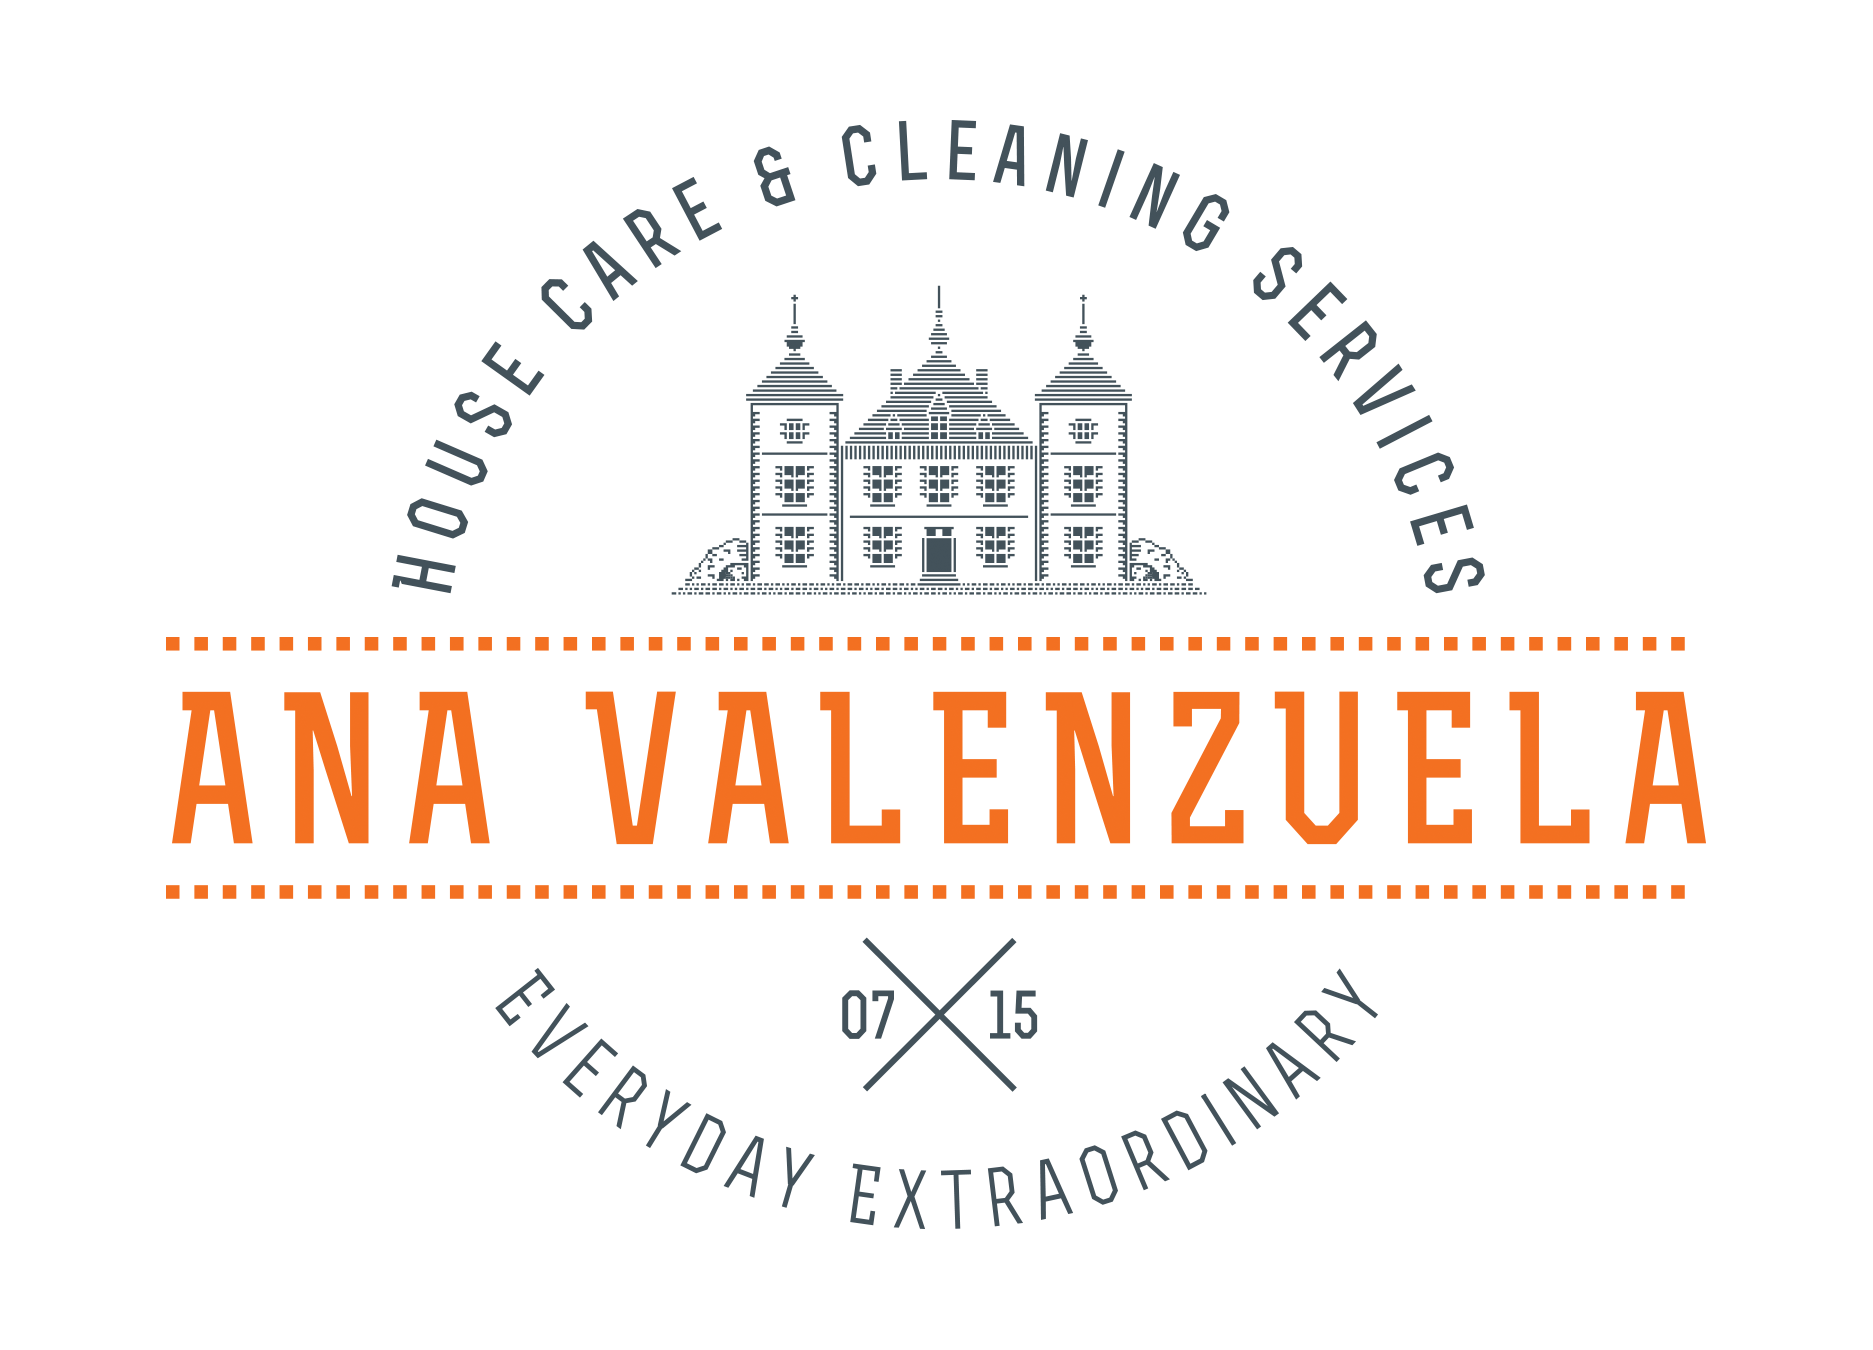 Ana Valenzuela logo | ana Valenzuela house cleaning services